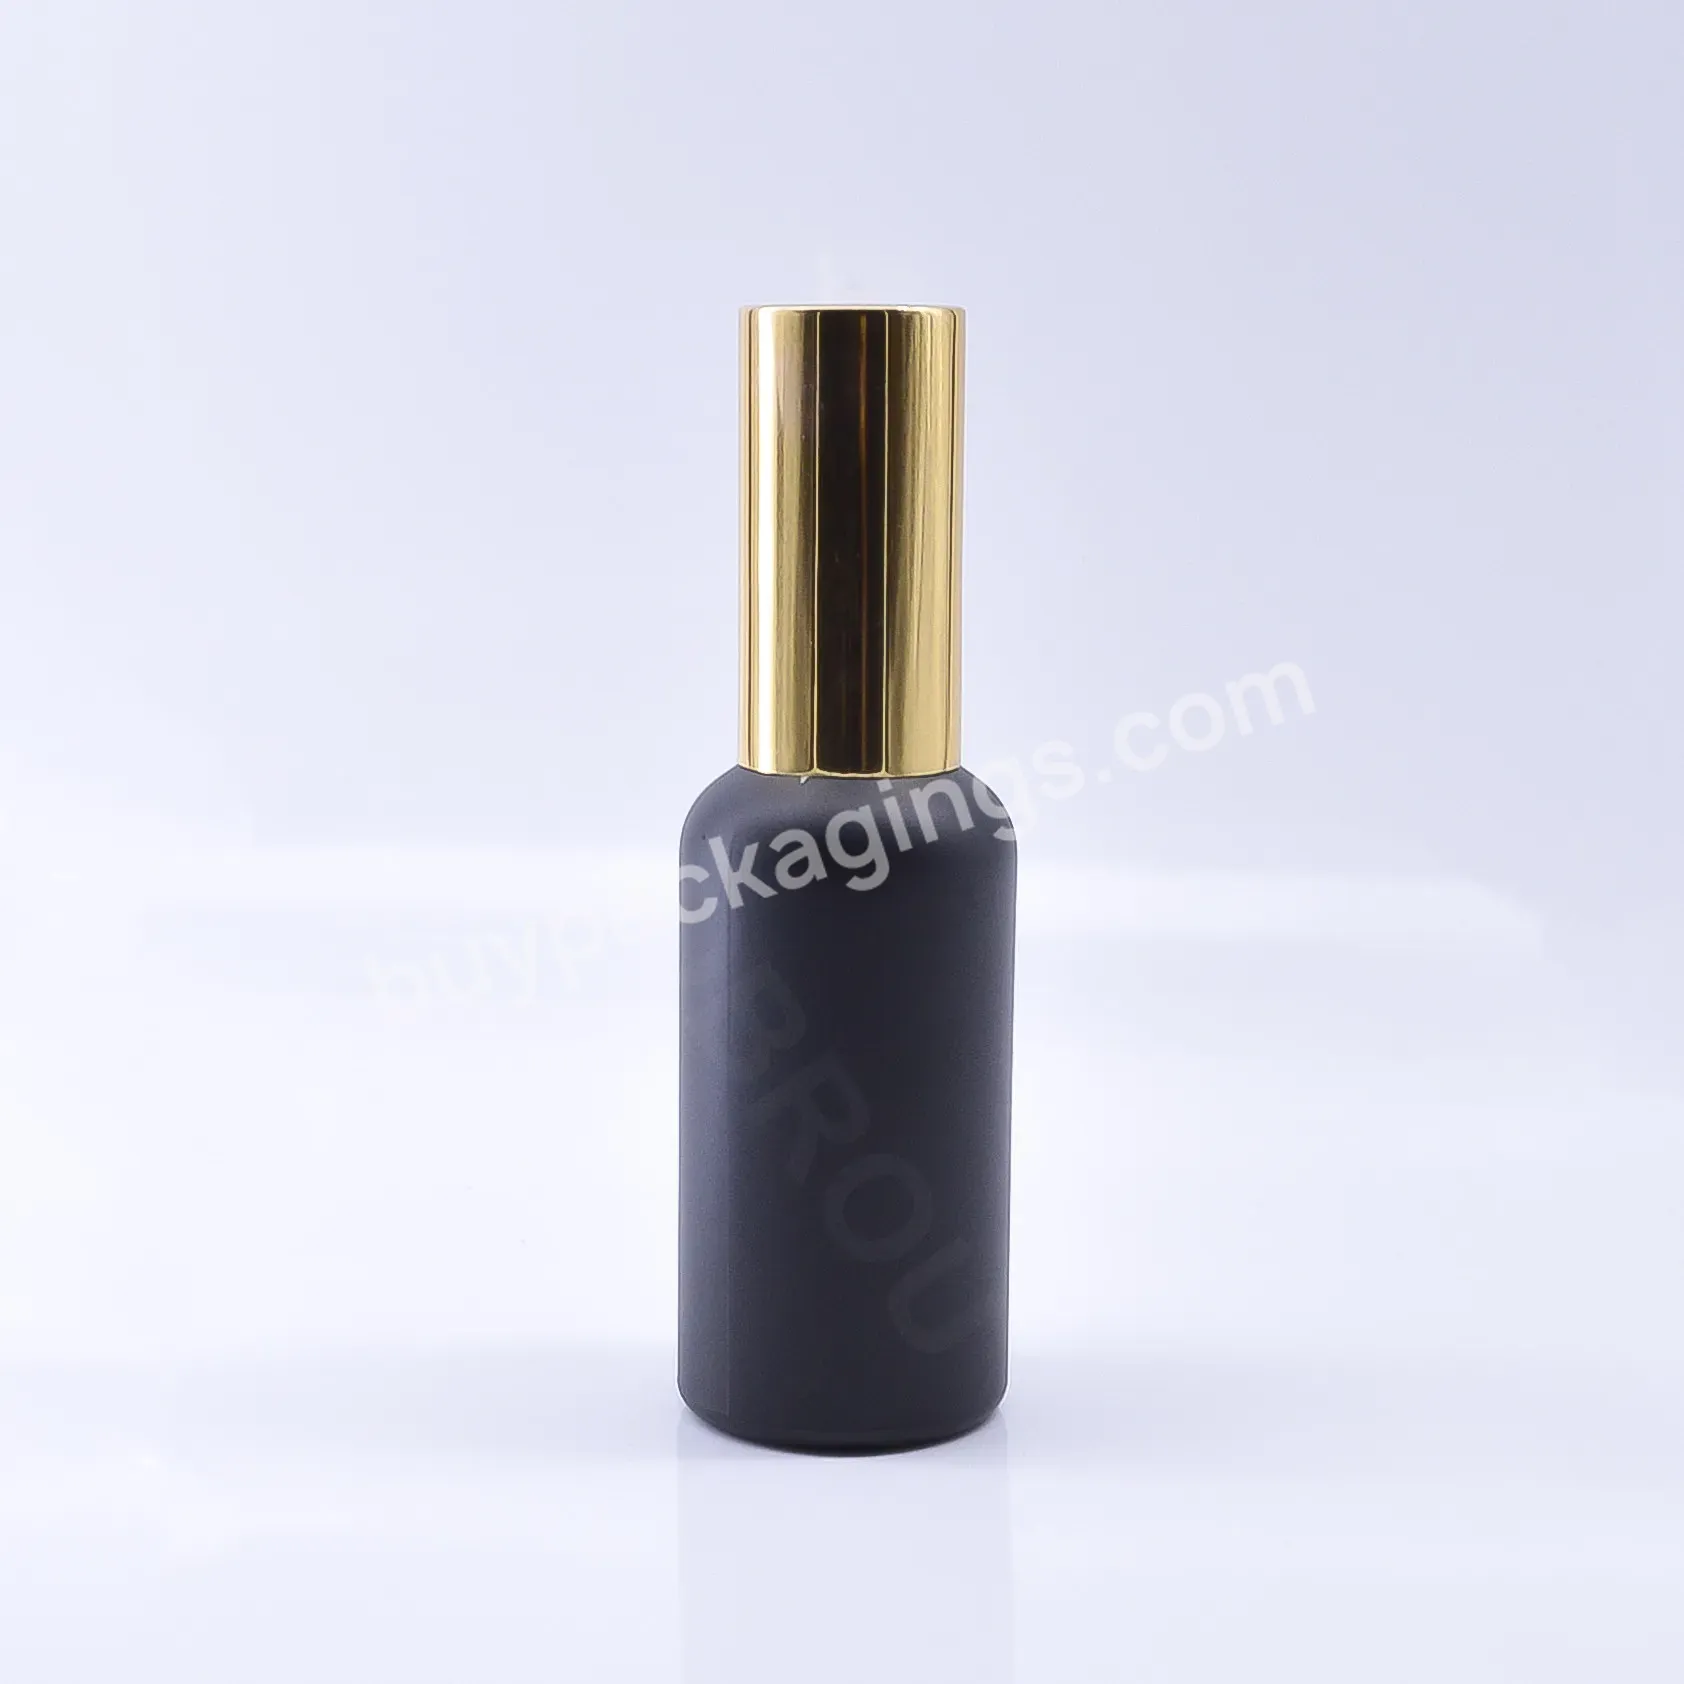 Essential Oil Packaging 5 10 15 20 30 50 100ml Matte Black Glass Spray Bottle Perfume Bottles With Spray Mist Cap